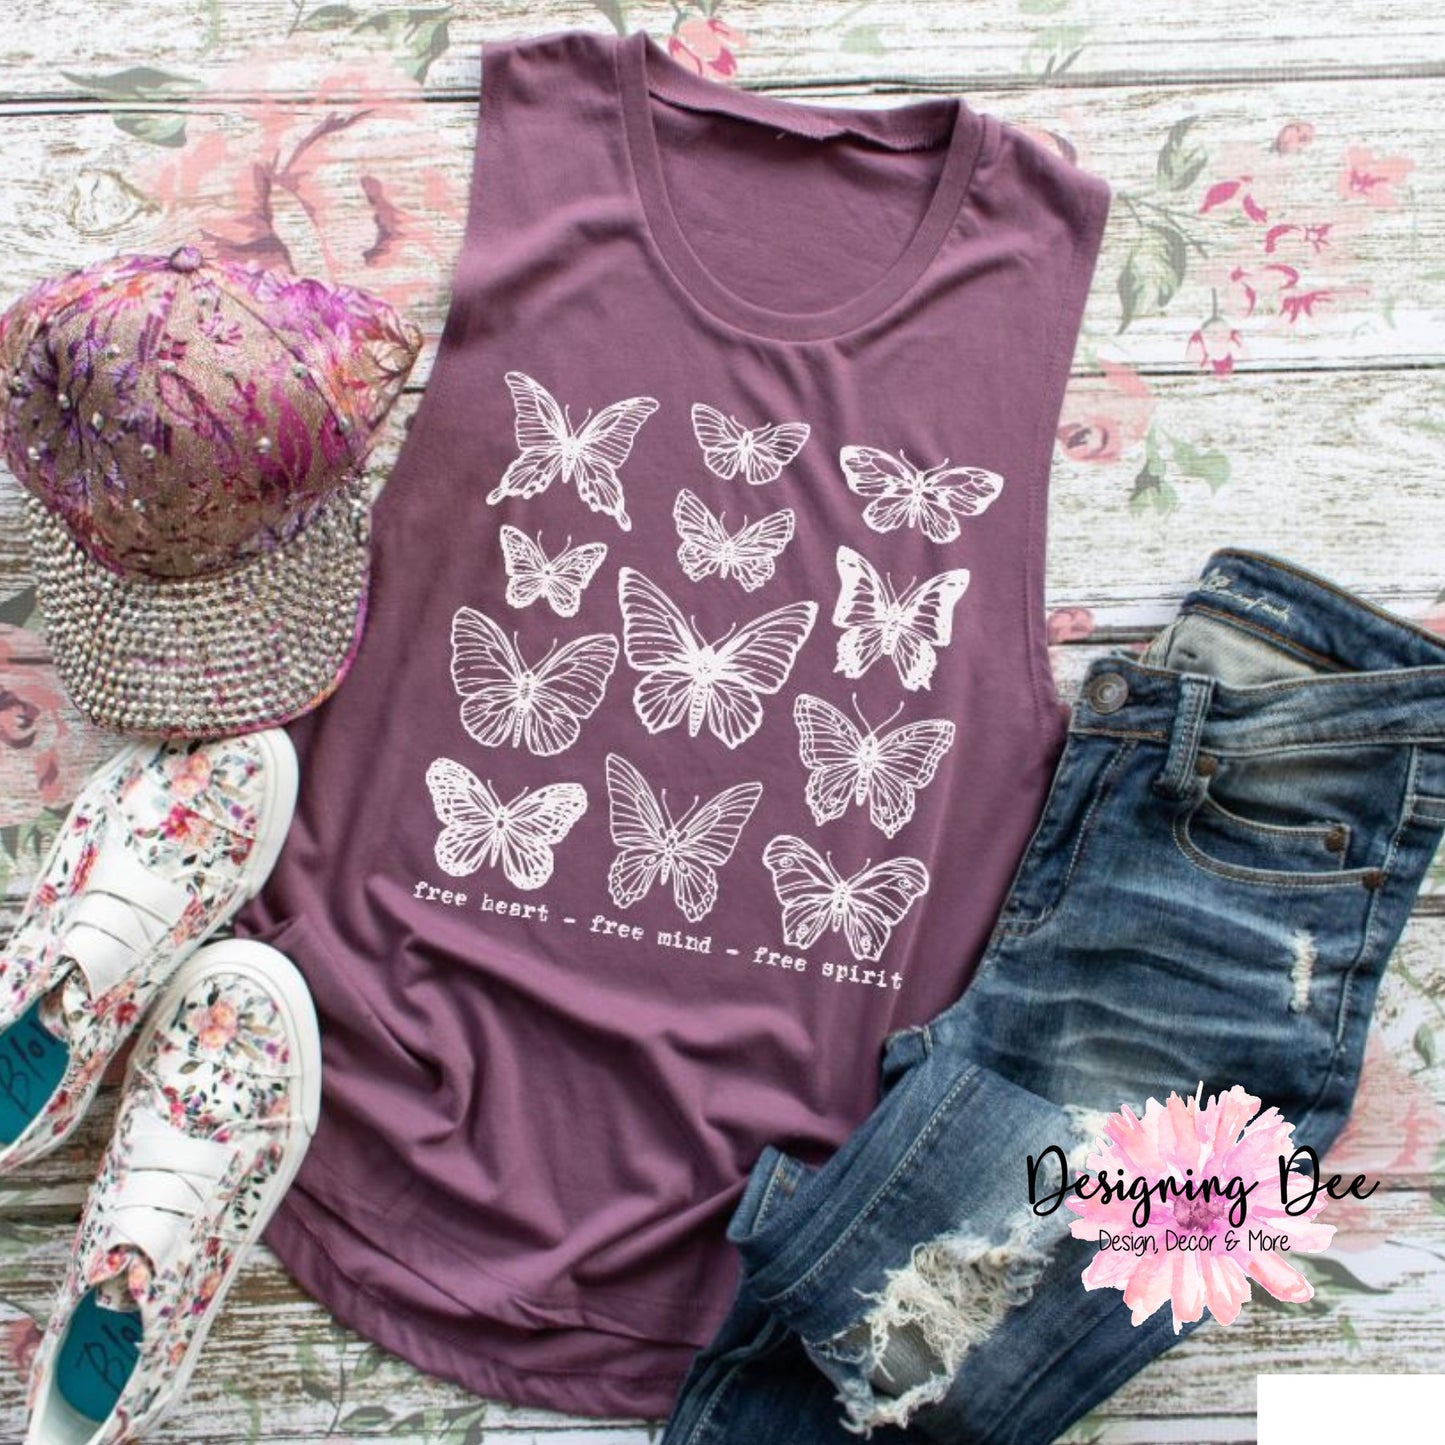 Free Heart, Free Mind, Free Spirit Butterfly Design Unisex Shirt